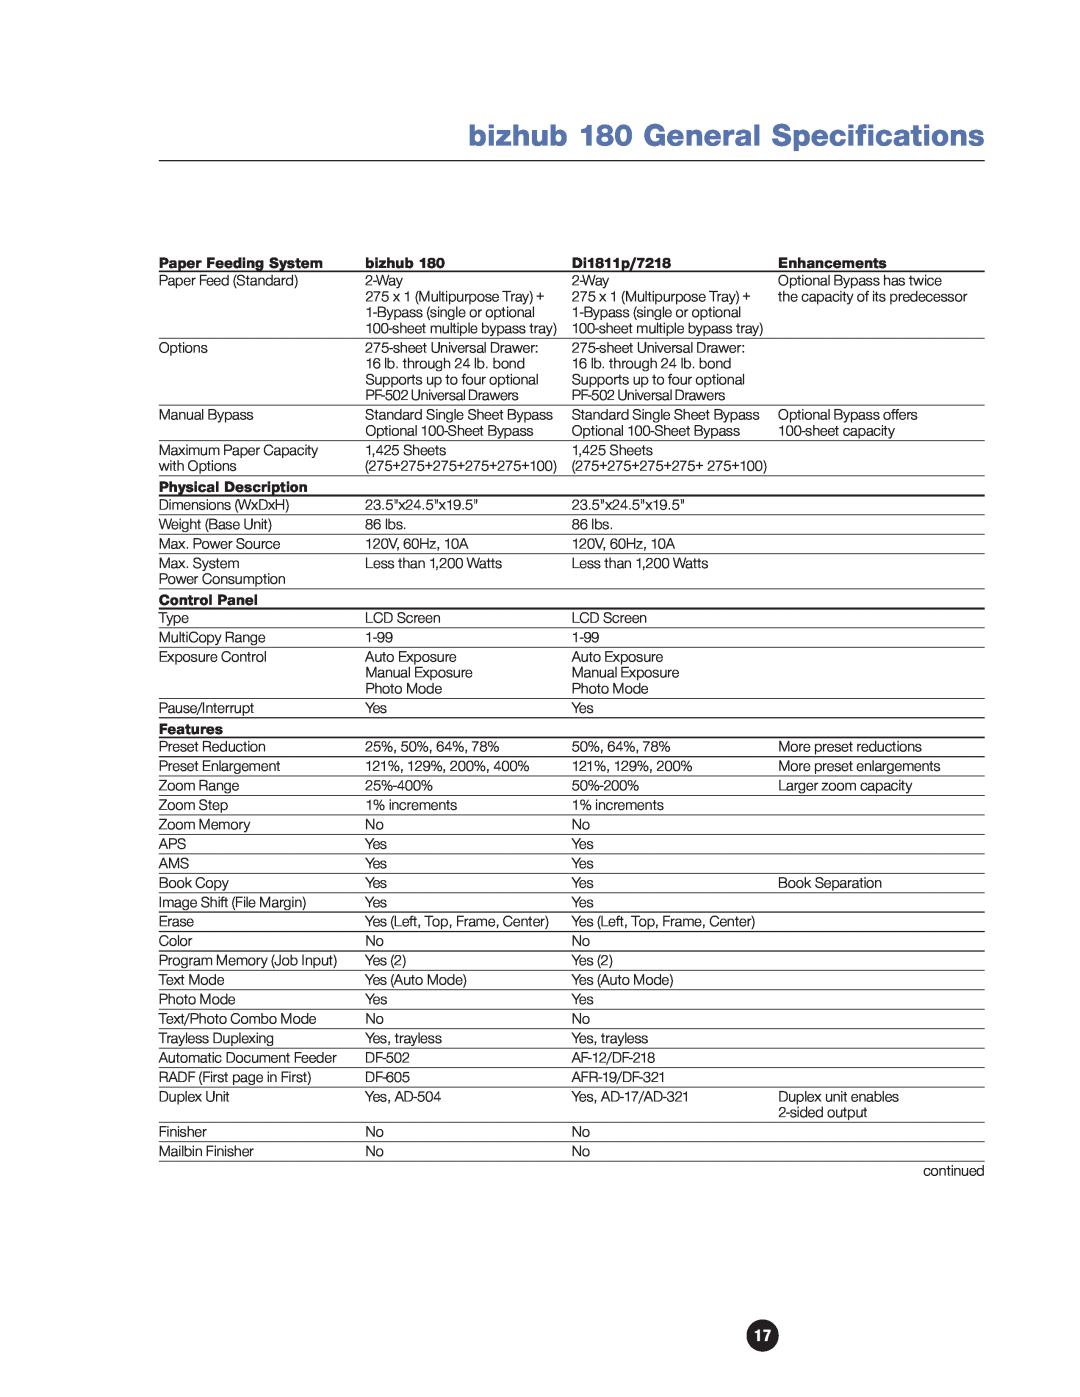 Konica Minolta manual bizhub 180 General Specifications, sheet multiple bypass tray 